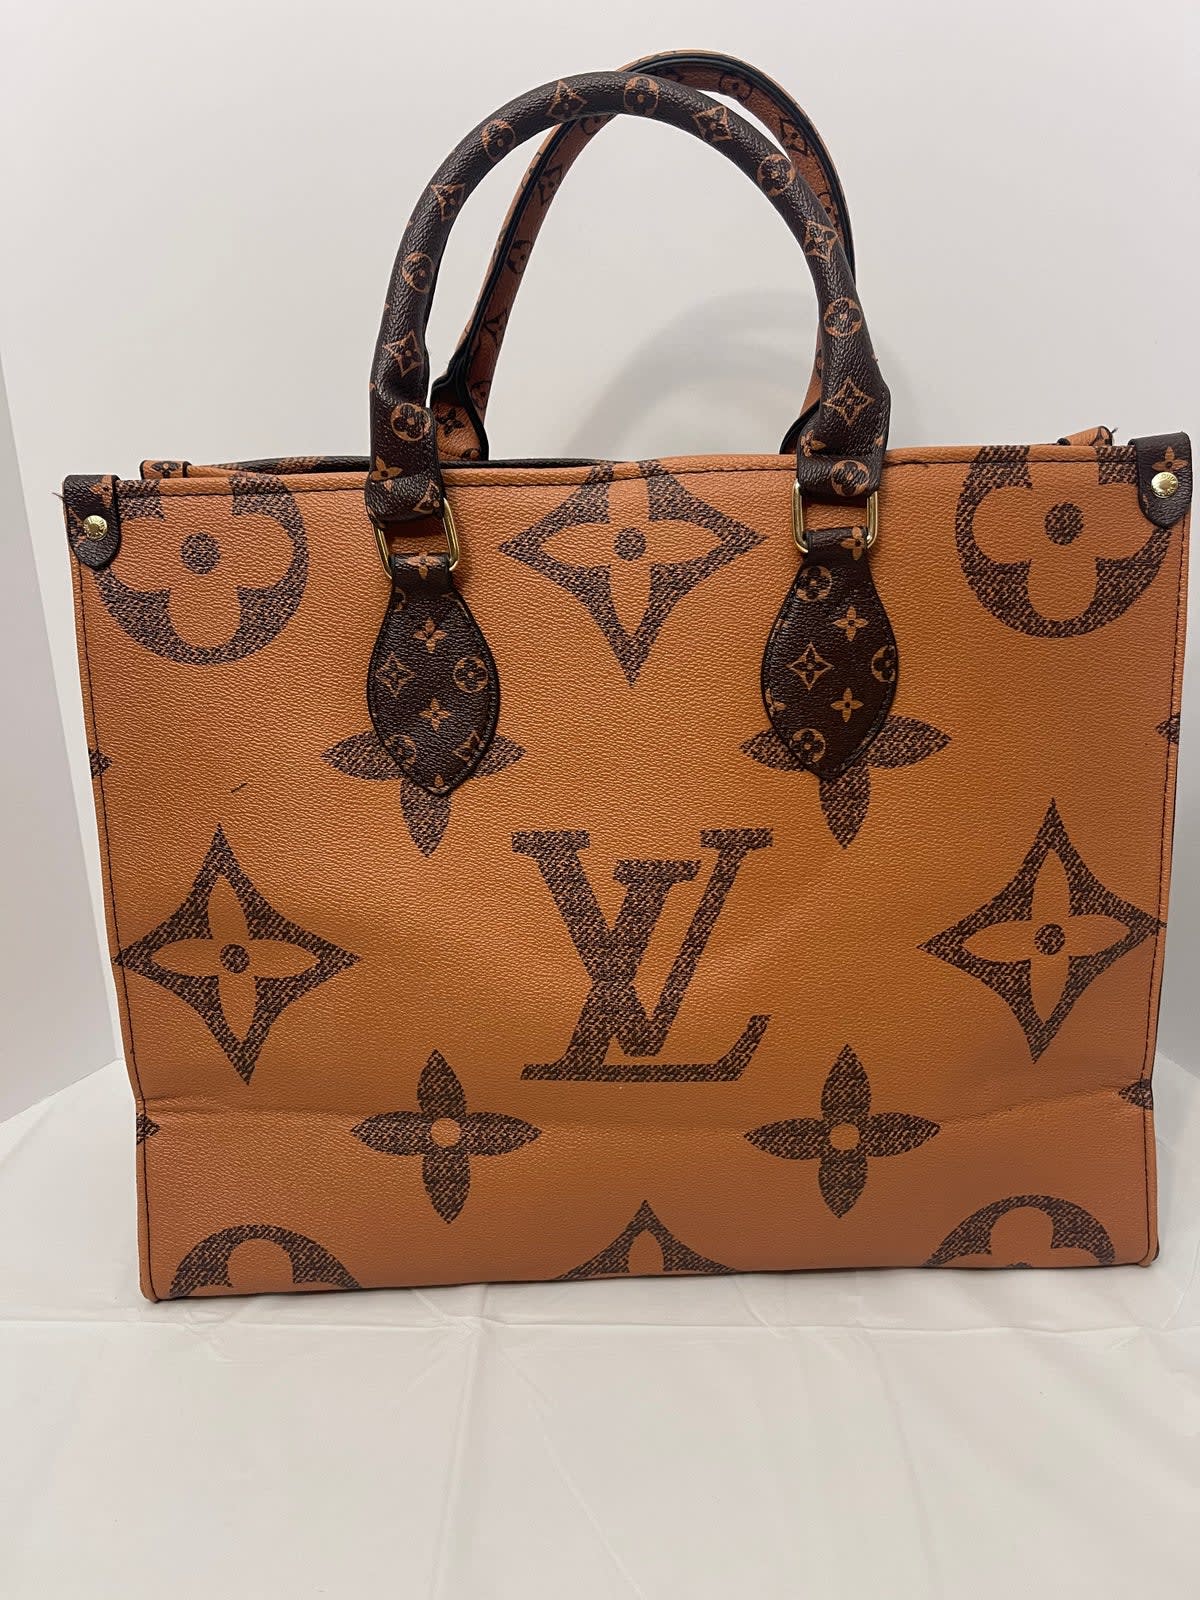 Louis Vuitton Large Tote Bag - Louis Vuitton bags - Timeless Kicks